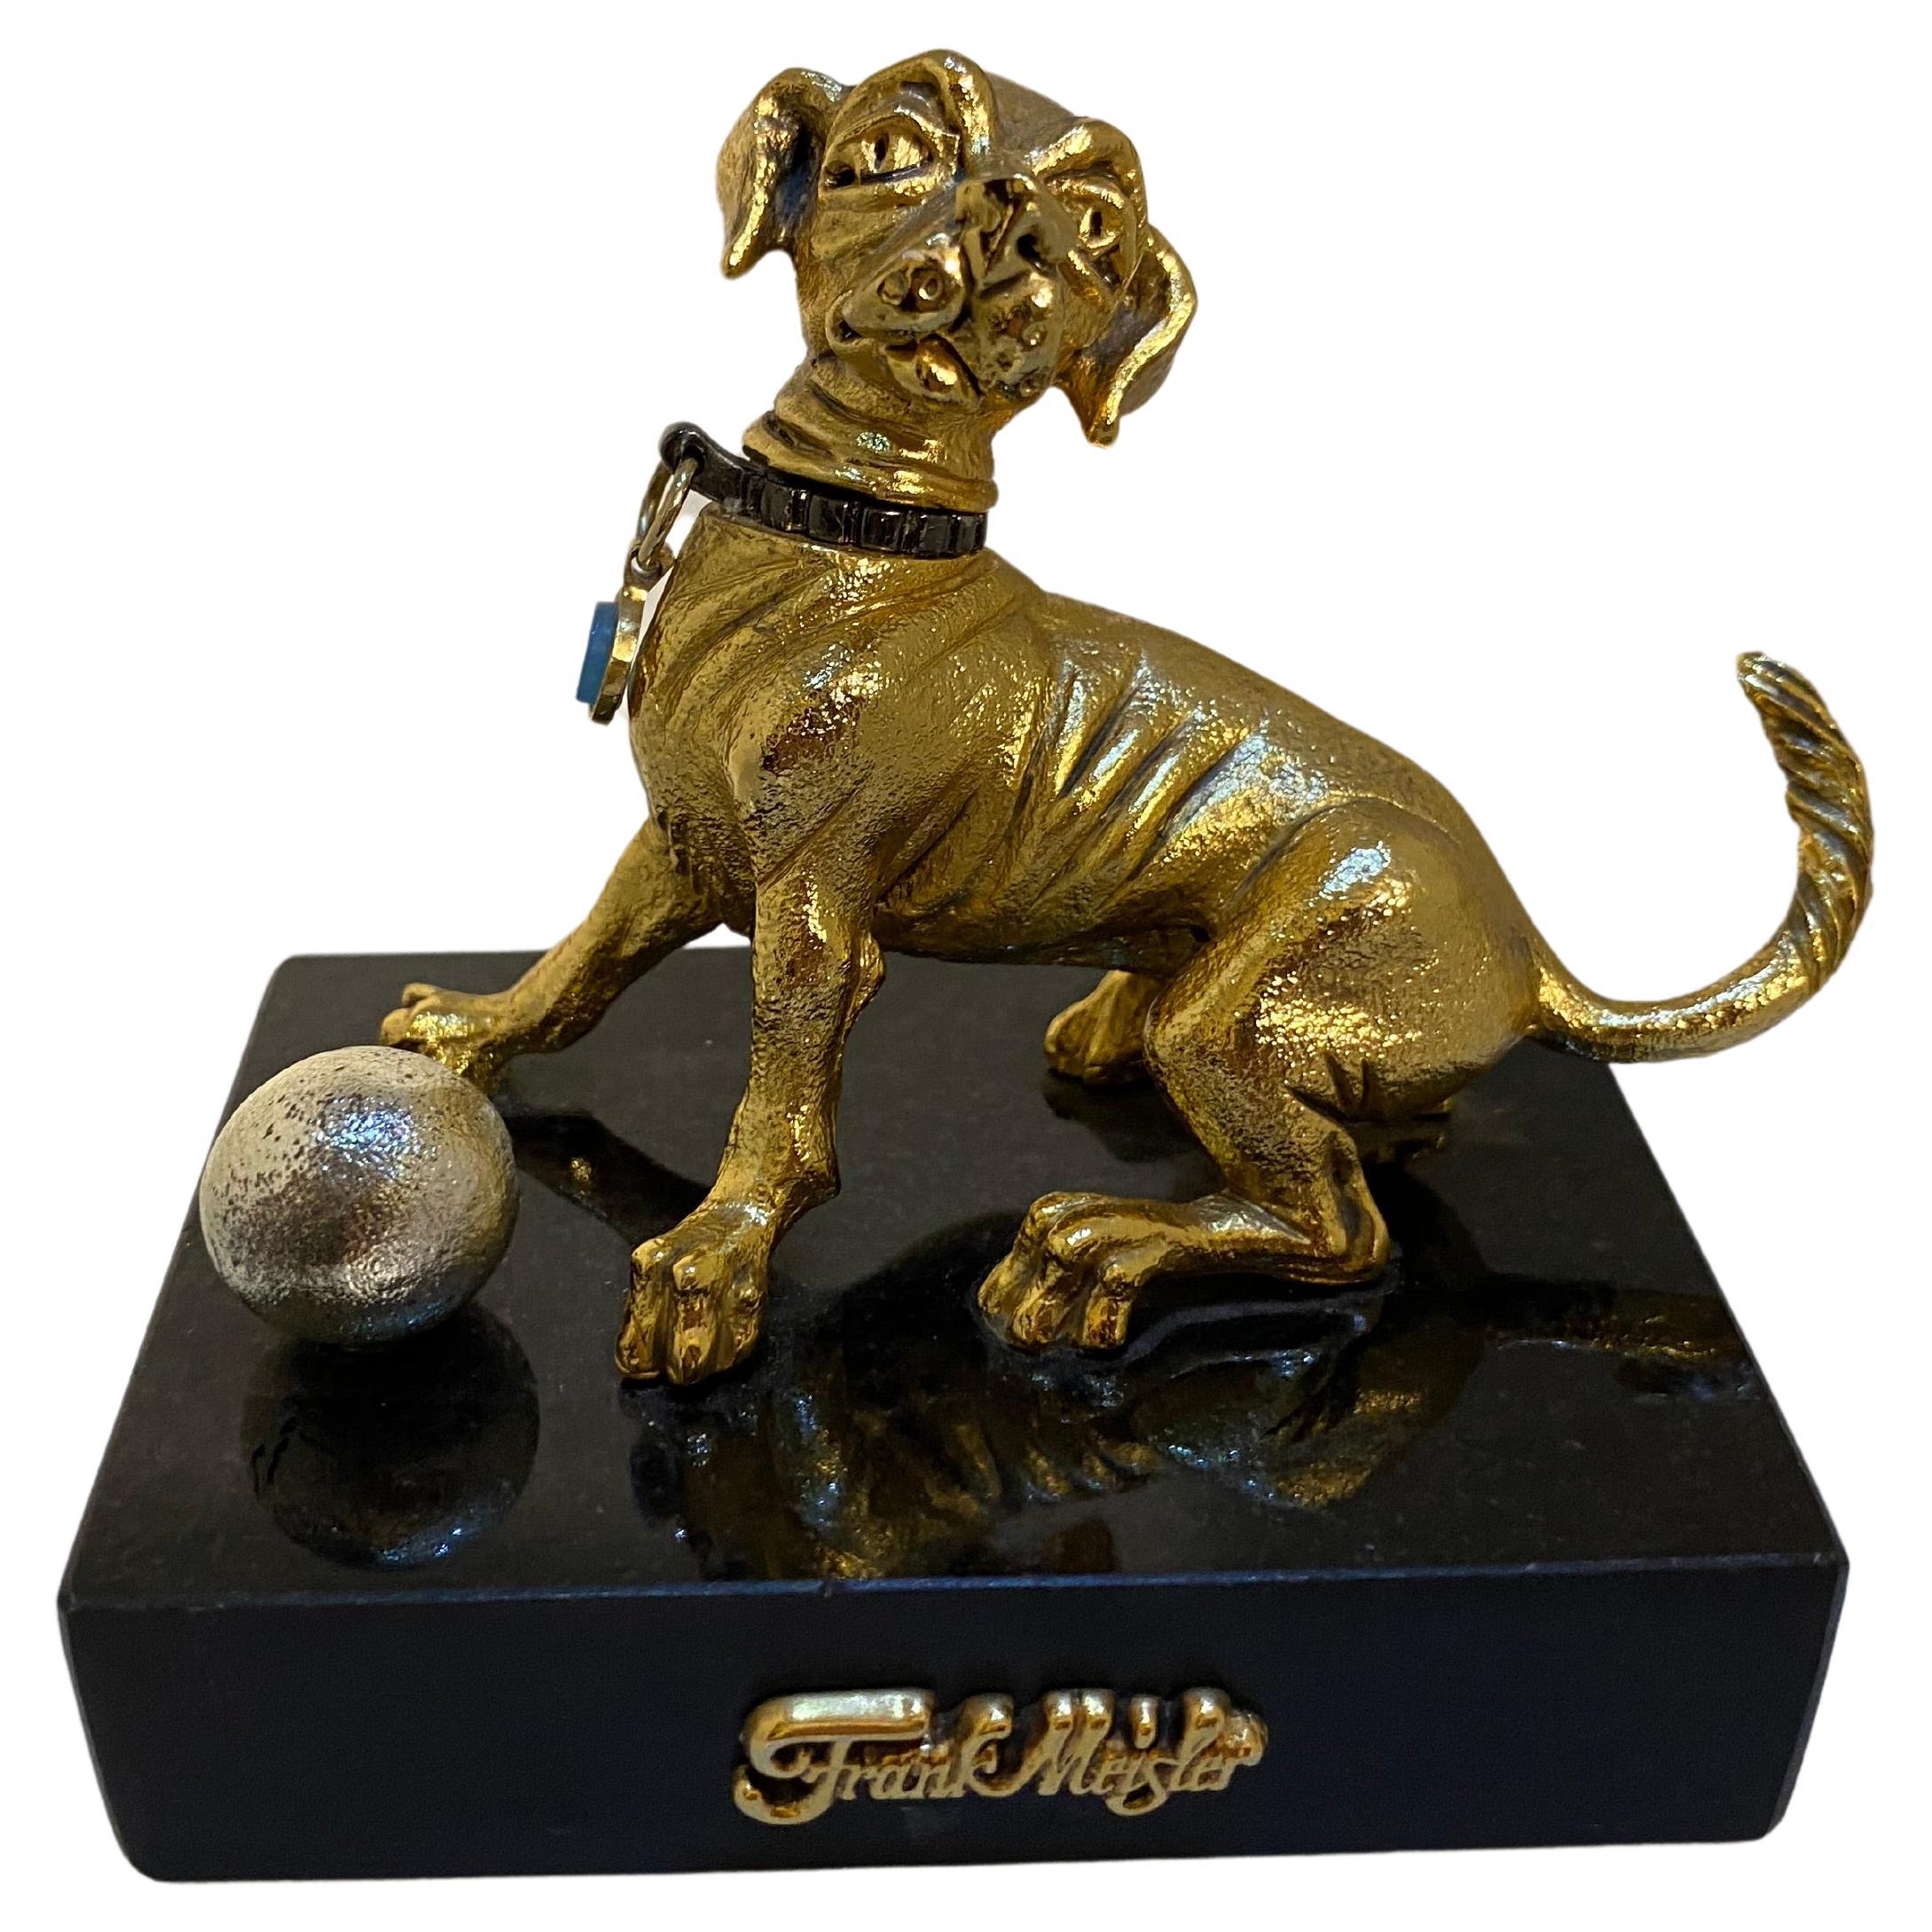 Frank Meisler Mini Gold Dog For Sale